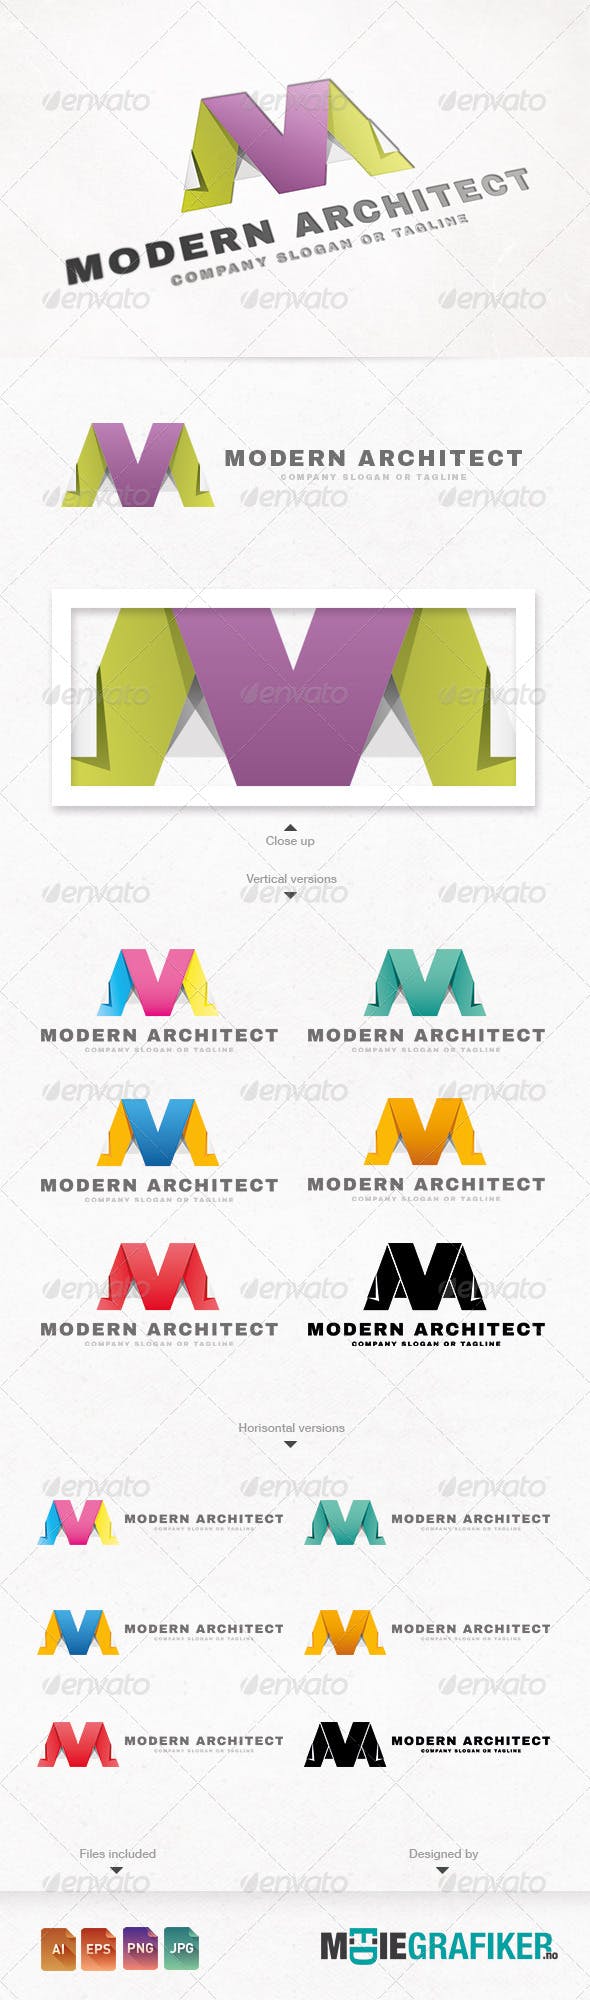 Modern Architect Logo - Modern Architect Logo By Kim David